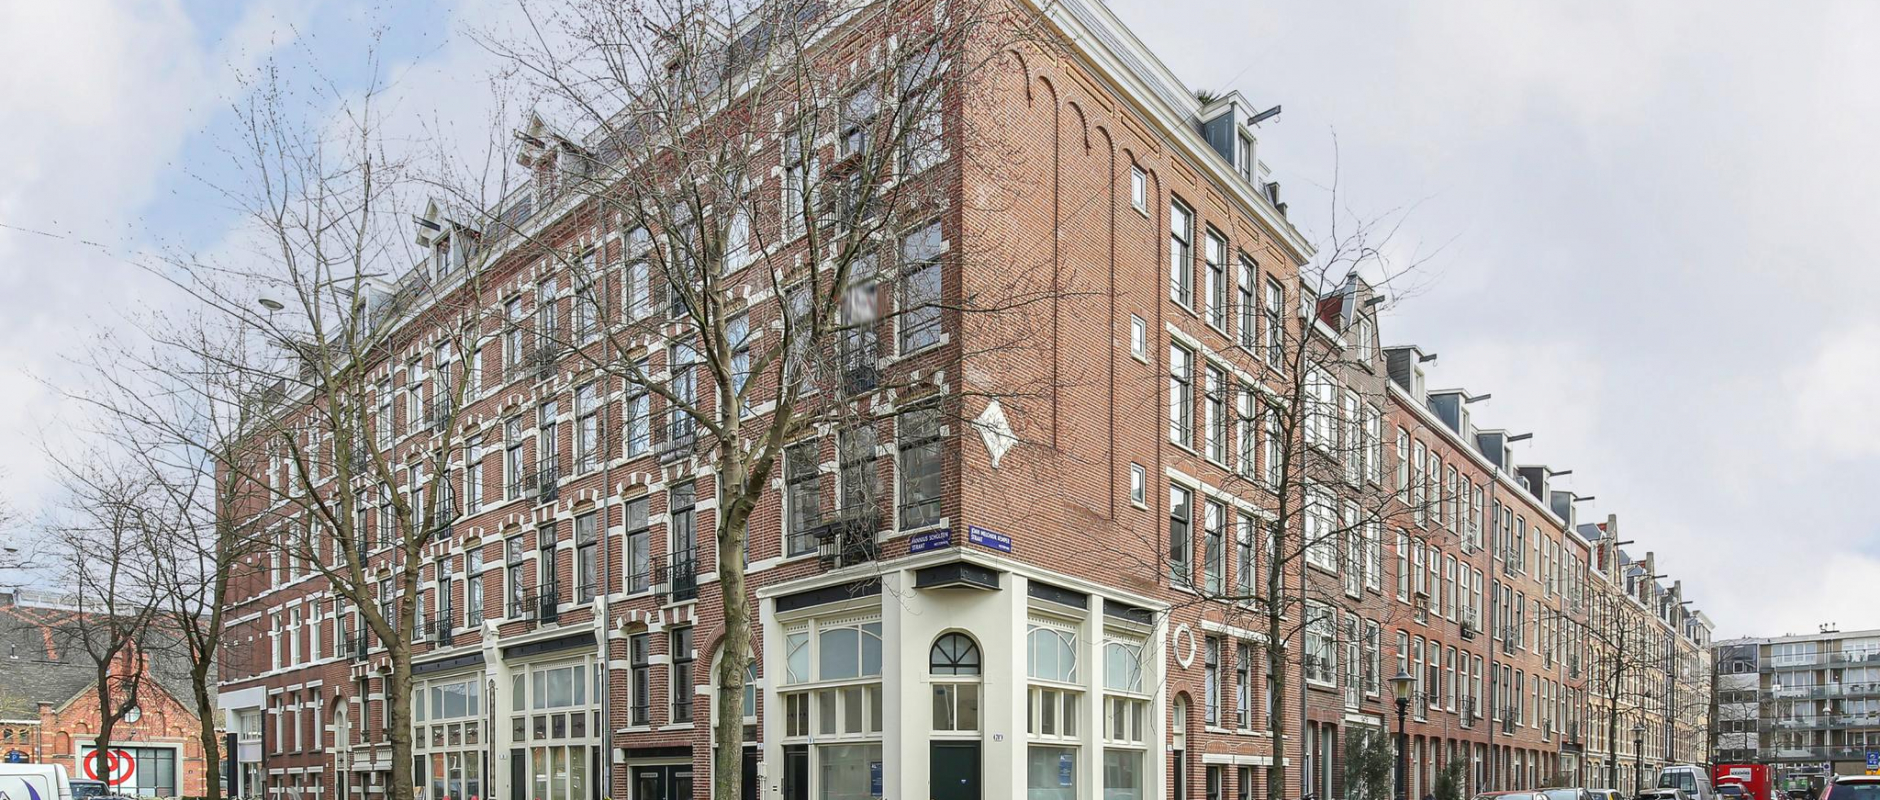 Woning te koop aan de Joan Melchior Kemperstraat 70 te Amsterdam